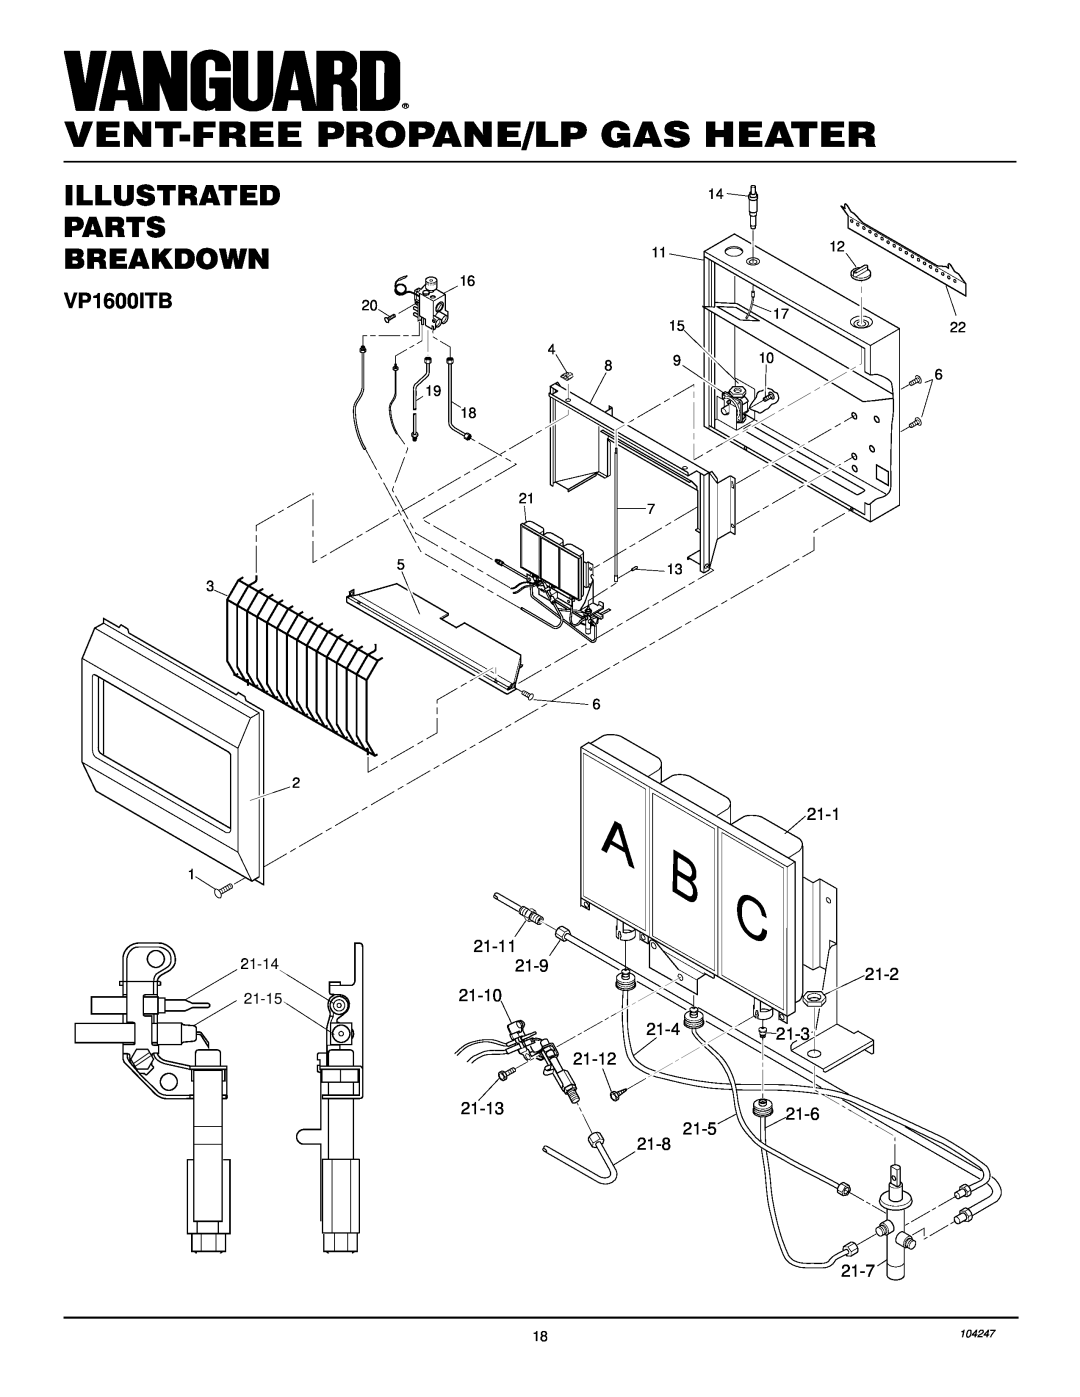 Desa VP2200ITB Illustrated Parts Breakdown, Vent-Freepropane/Lp Gas Heater, 21-11, 21-9, 21-10, 21-4, 21-3, 21-2, 21-7 